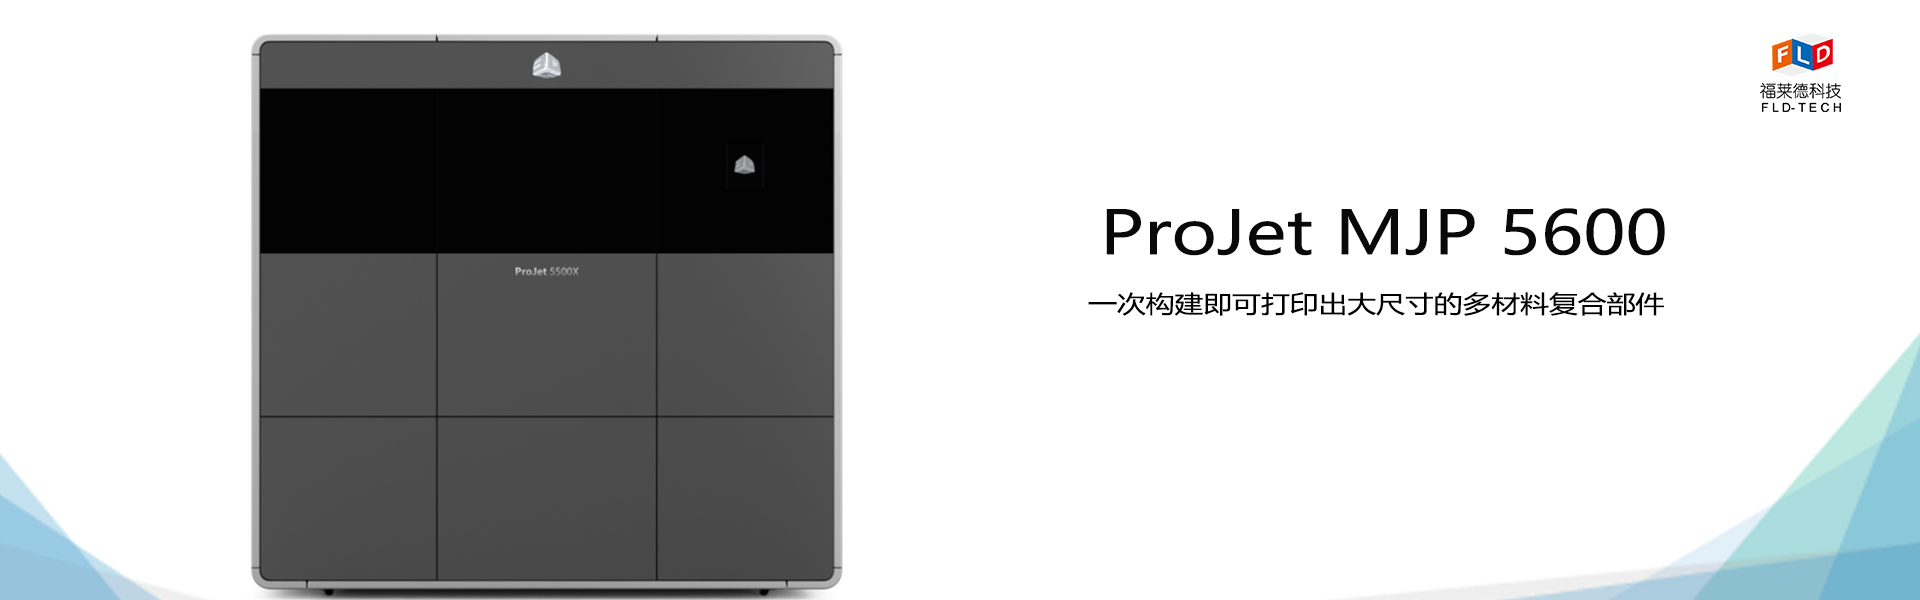 ProJet MJP 5600 3D打印机